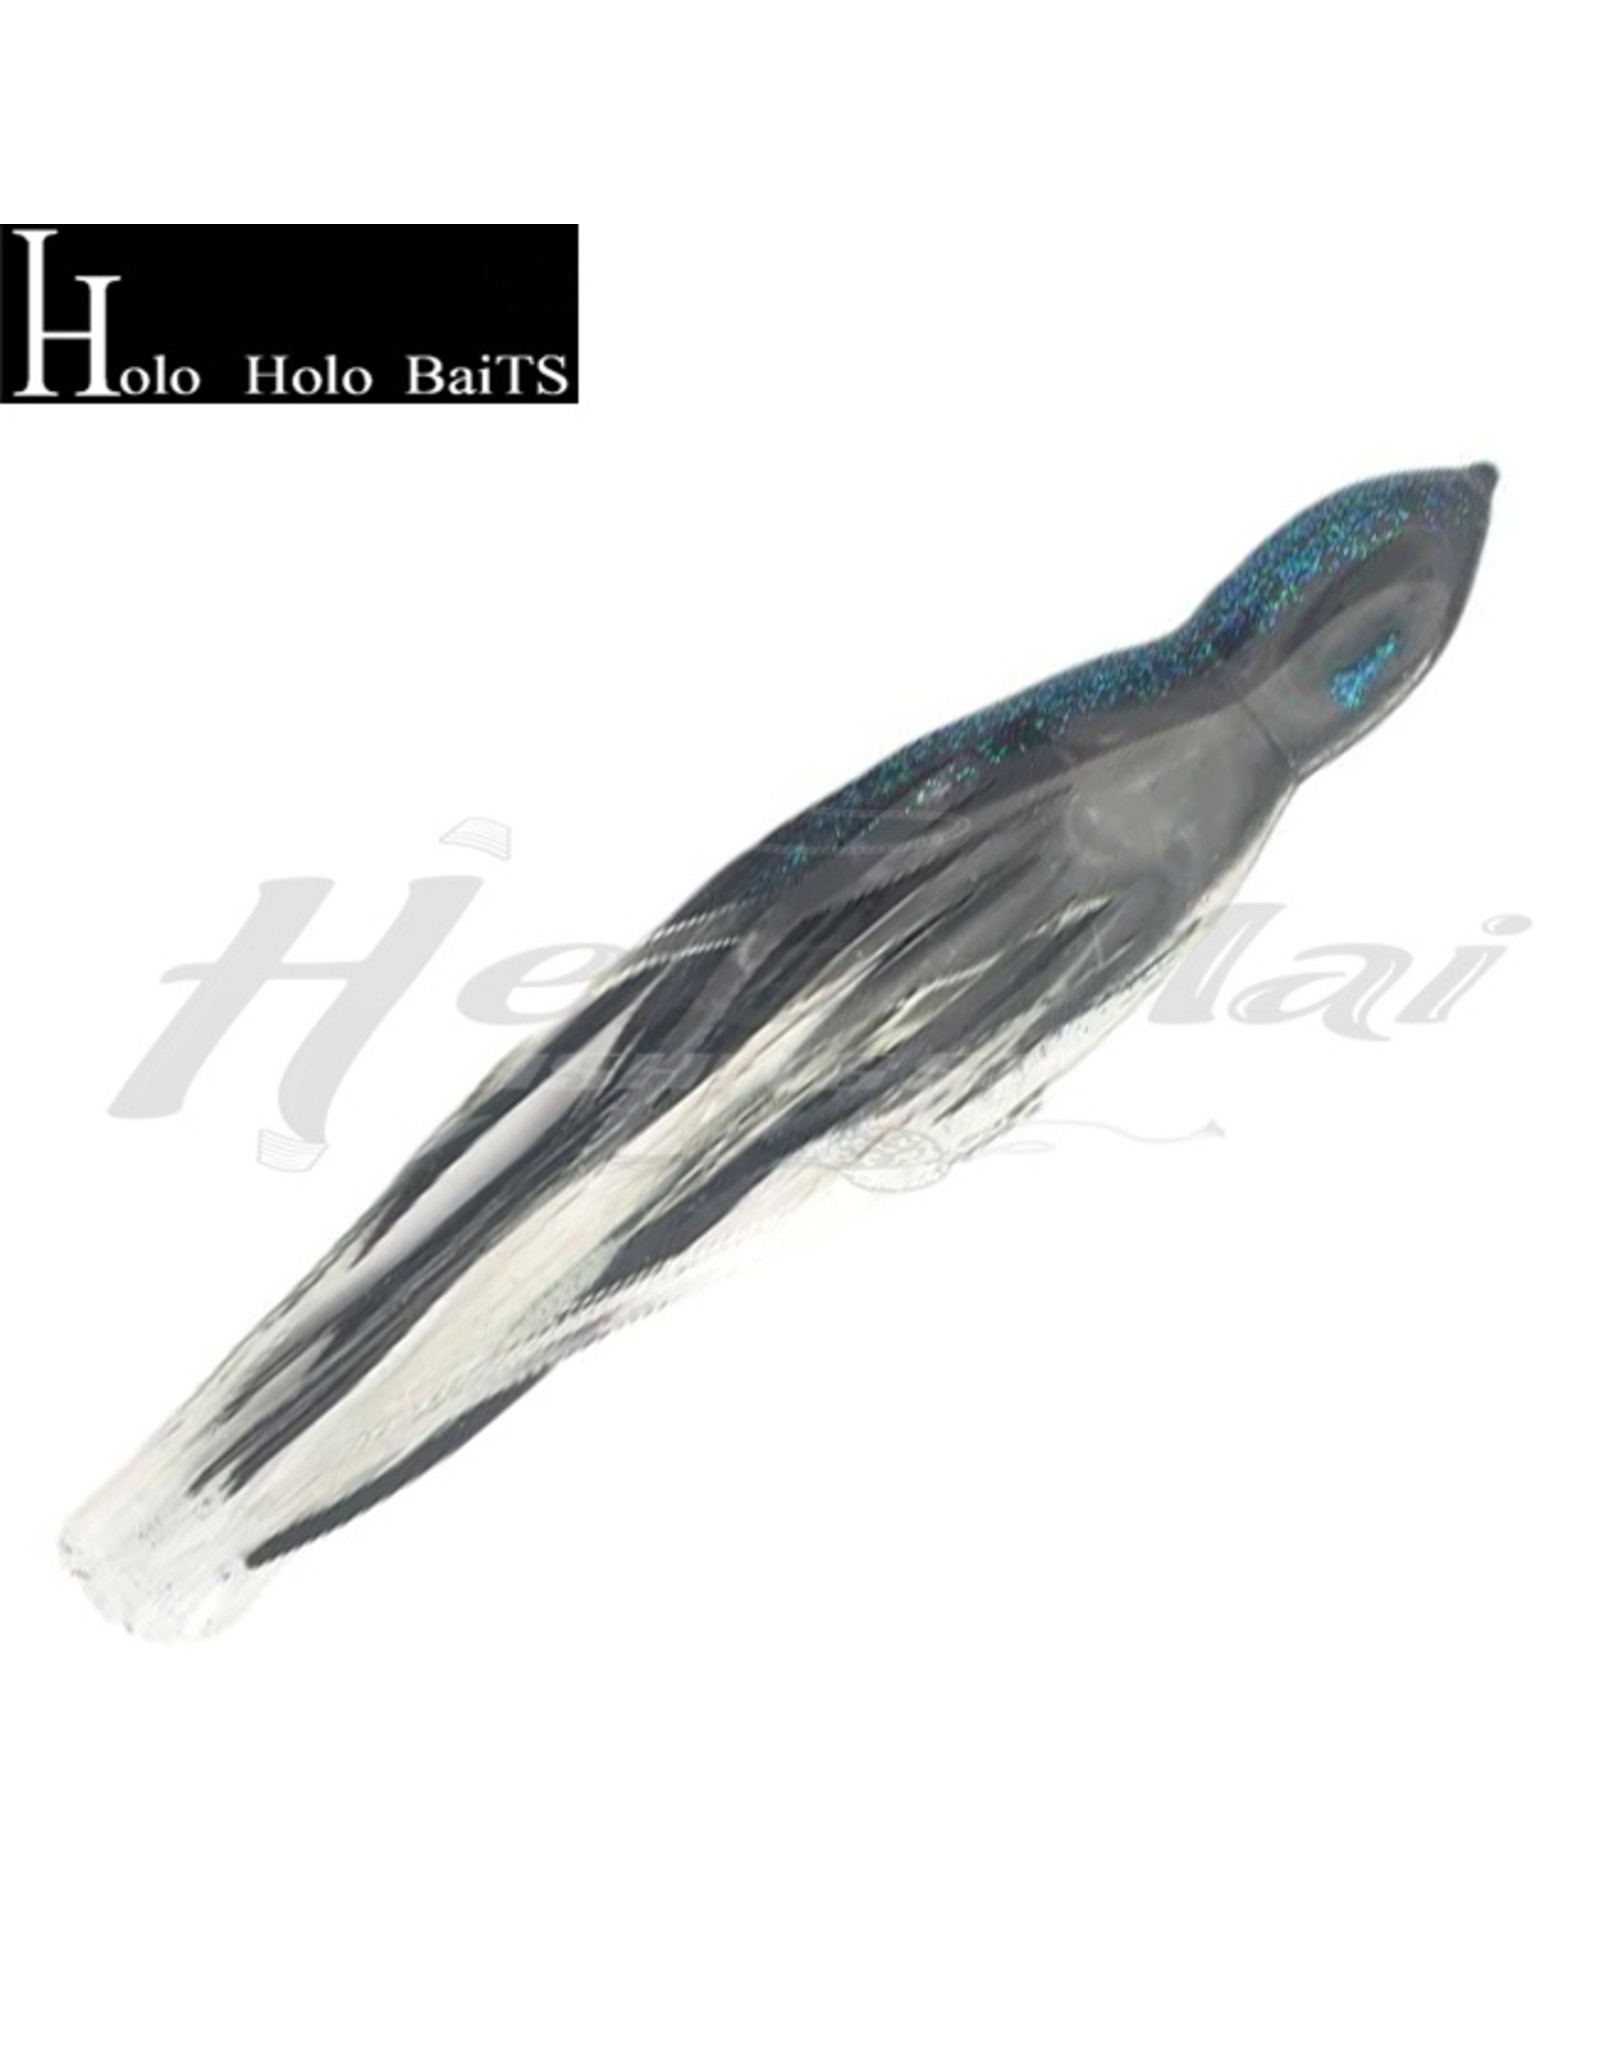 HOLO HOLO Squid Skirt, 5" New Clear Black Grean Blue Glitter